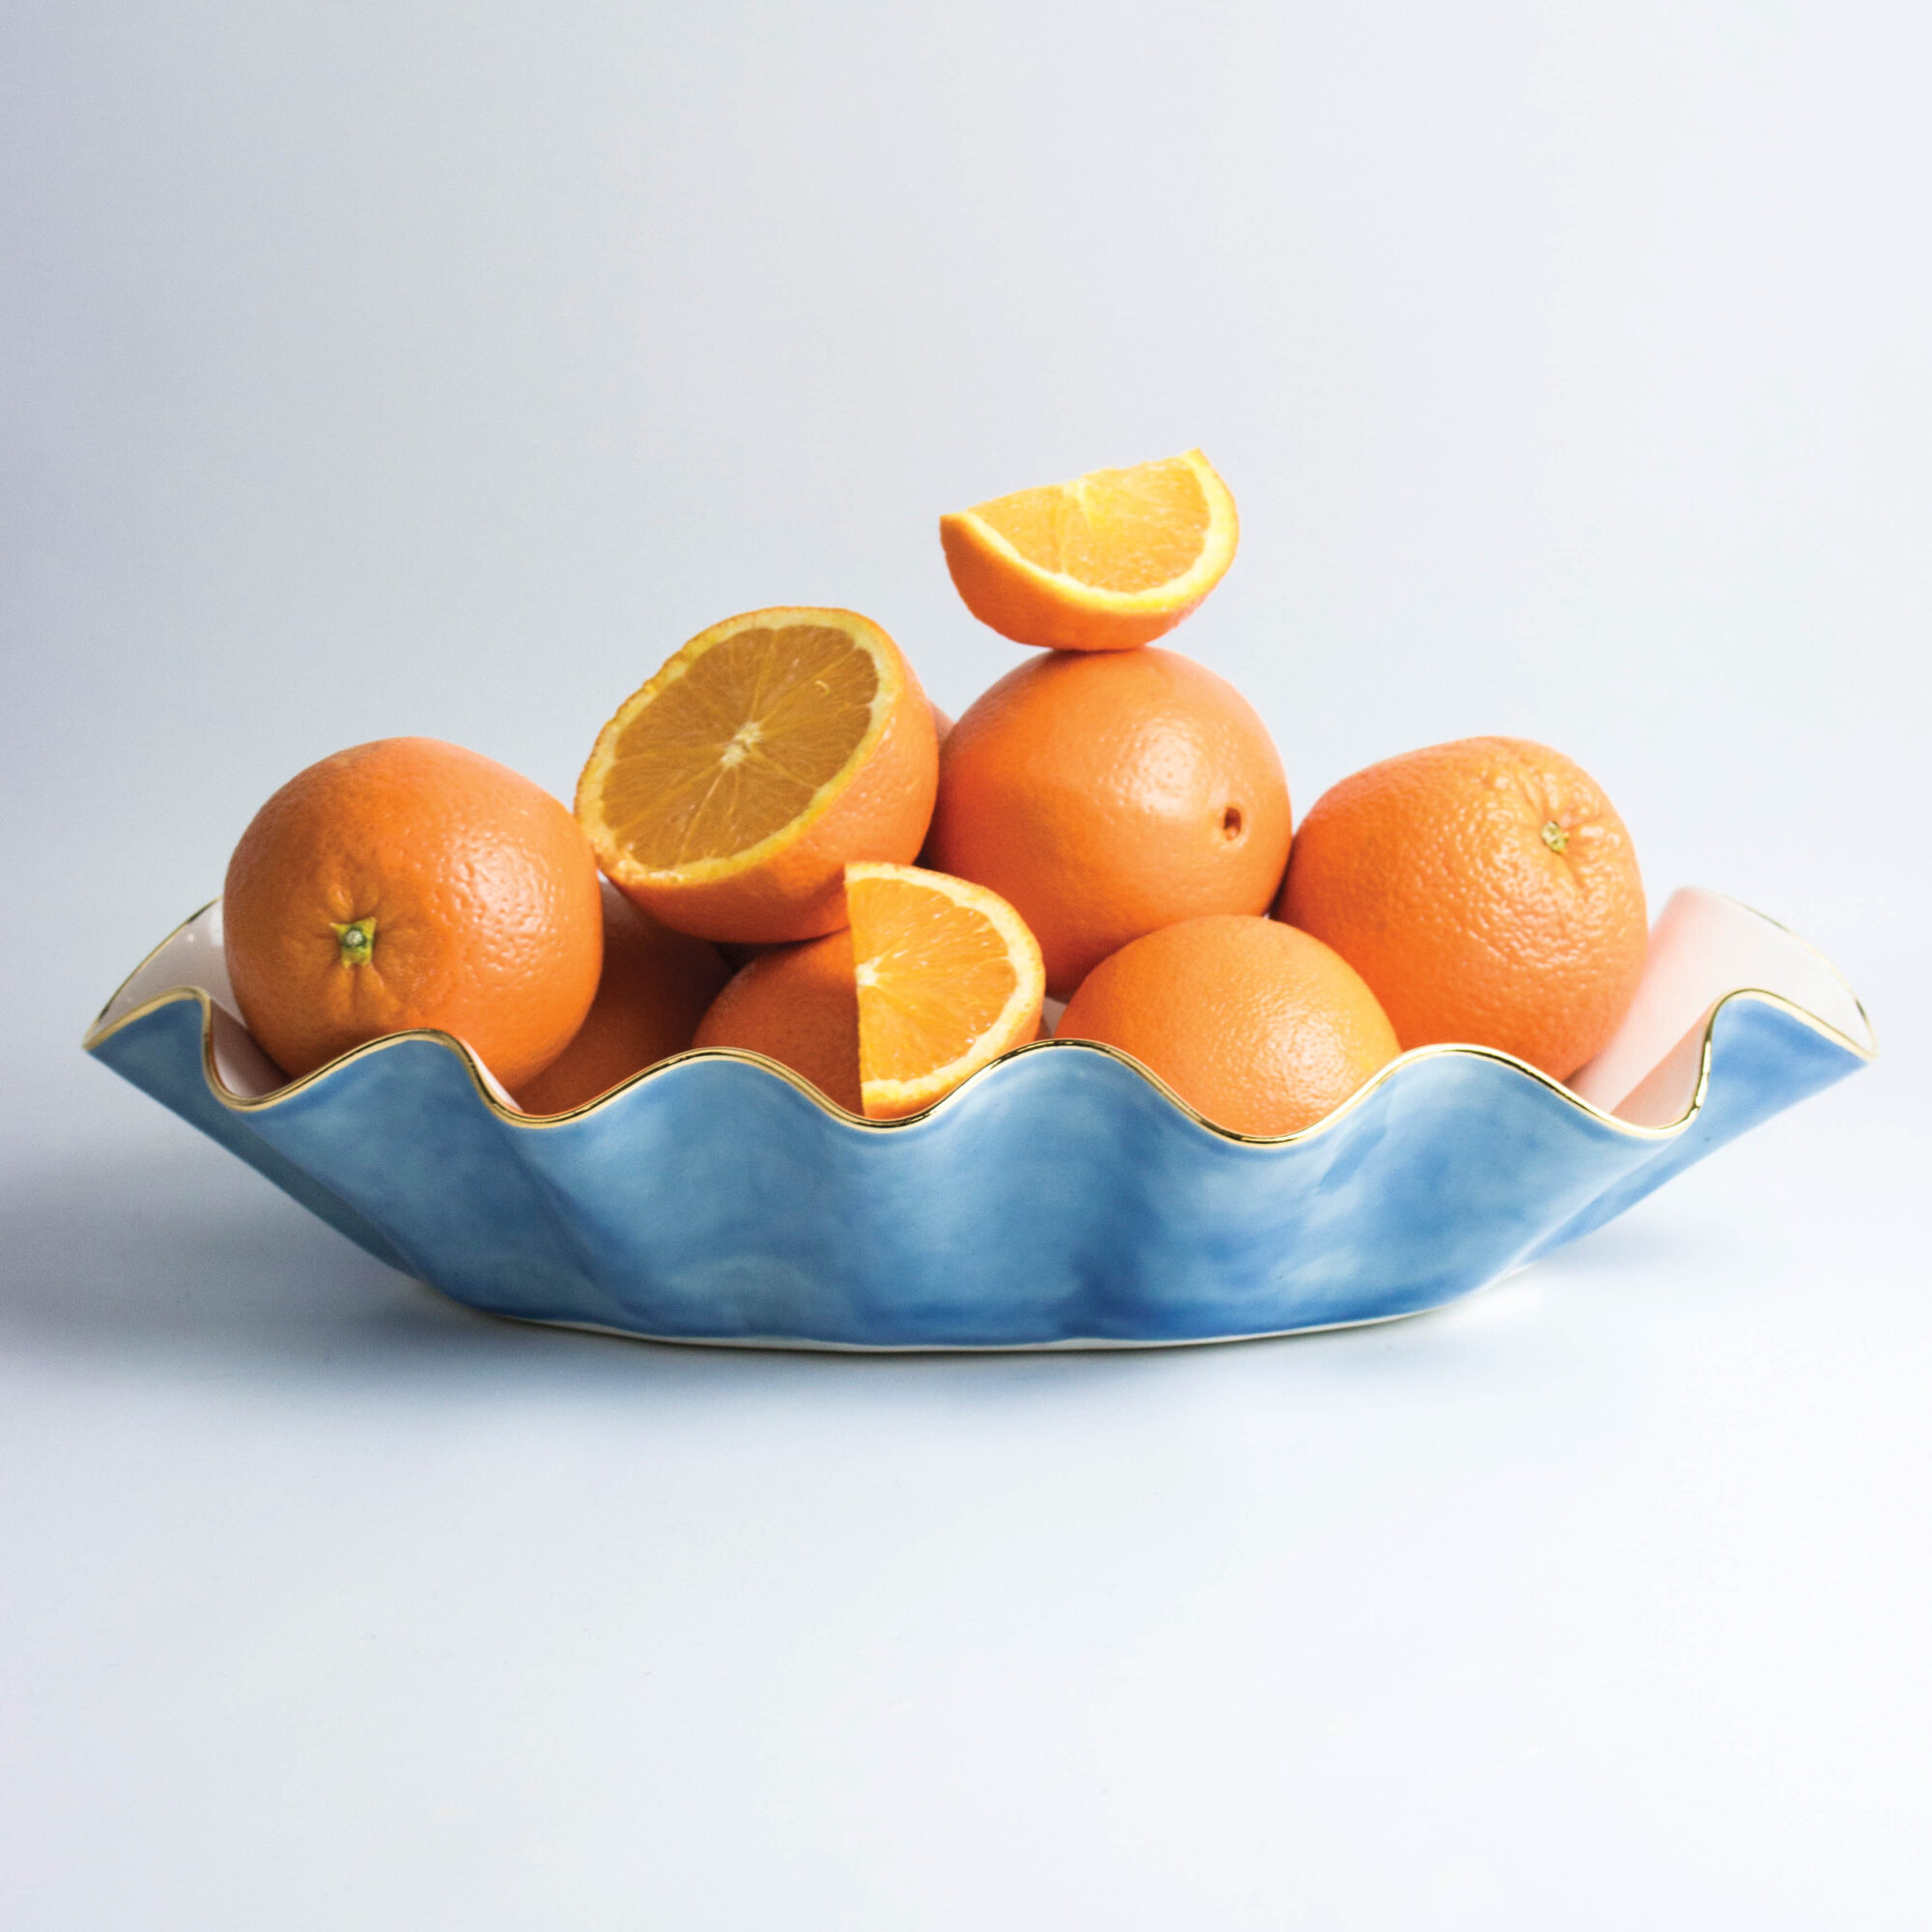 wavy bowl with oranges